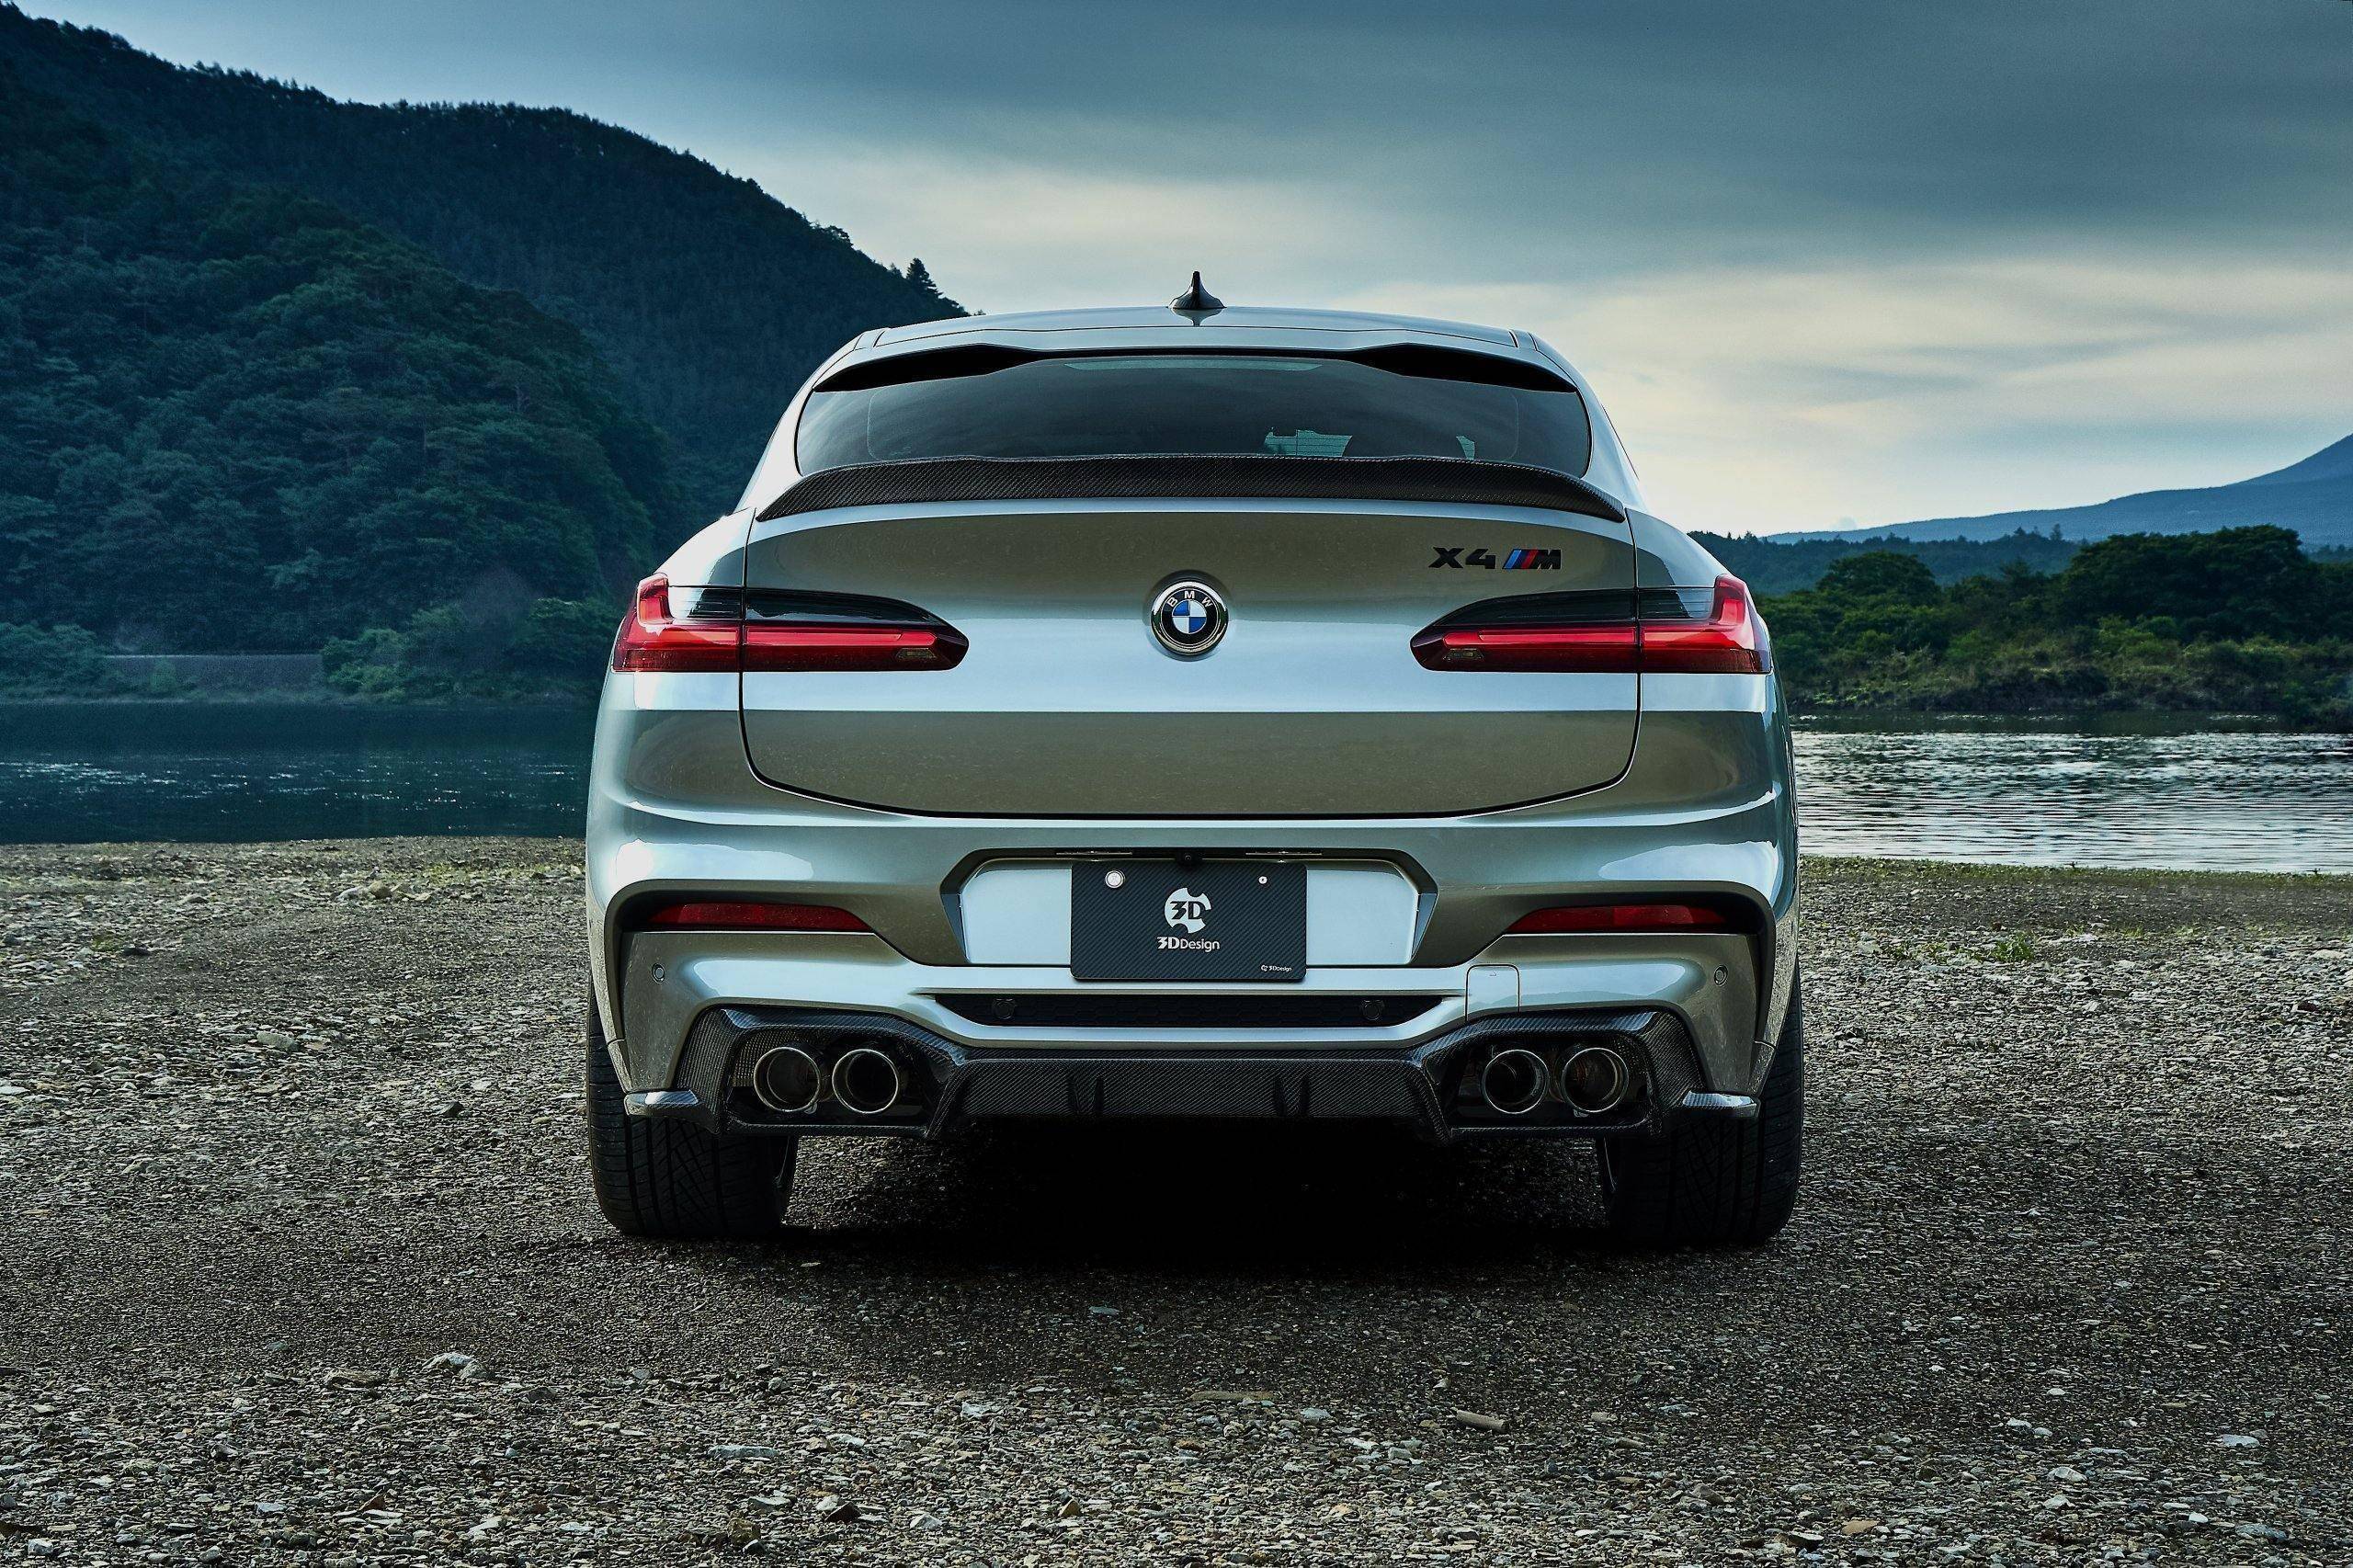 3DDesign Carbon Fibre Trunk Spoiler for BMW X4M (2019+, F98), Rear Spoilers, 3DDesign - AUTOID | Premium Automotive Accessories